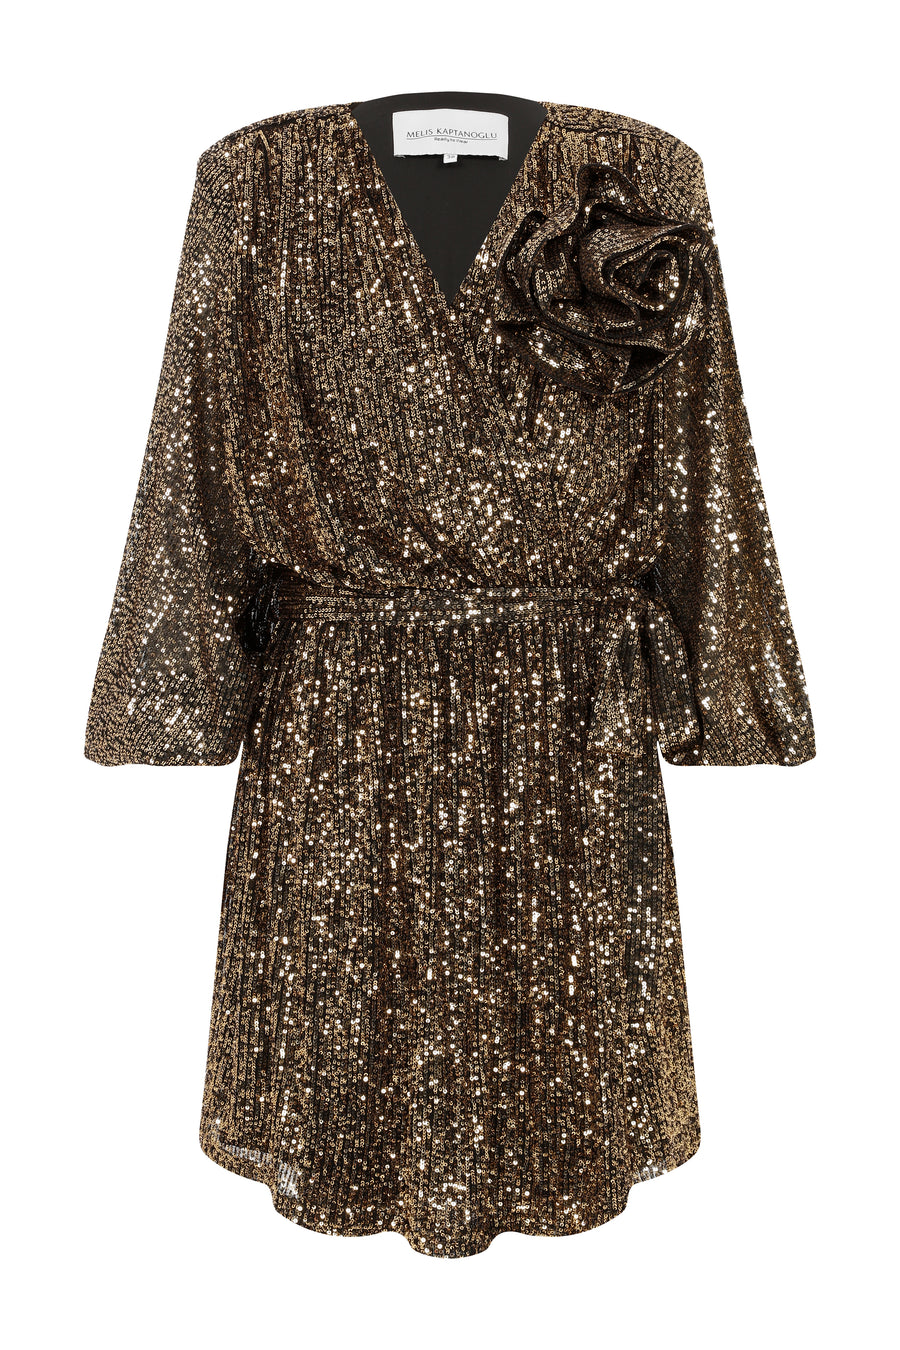 Soleil Gold Wrap-Over Sequin Dress